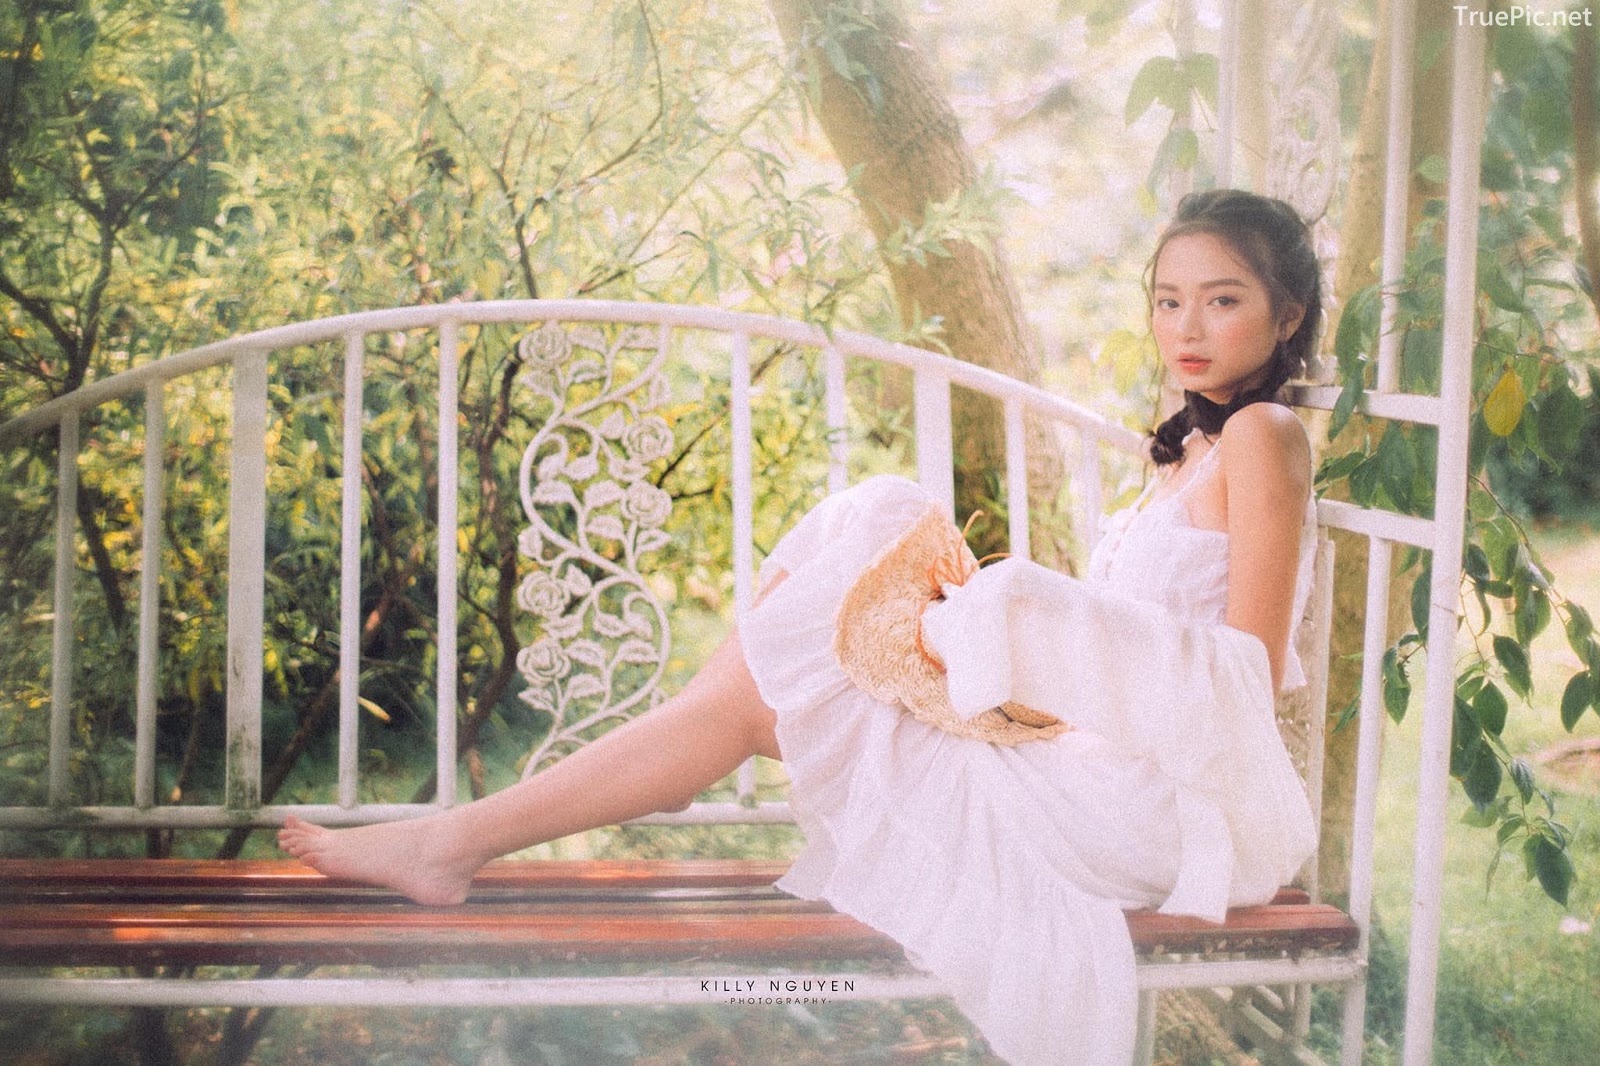 Vietnamese Sexy Model - Vu Ngoc Kim Chi - Beautiful in white - TruePic.net- Picture 32